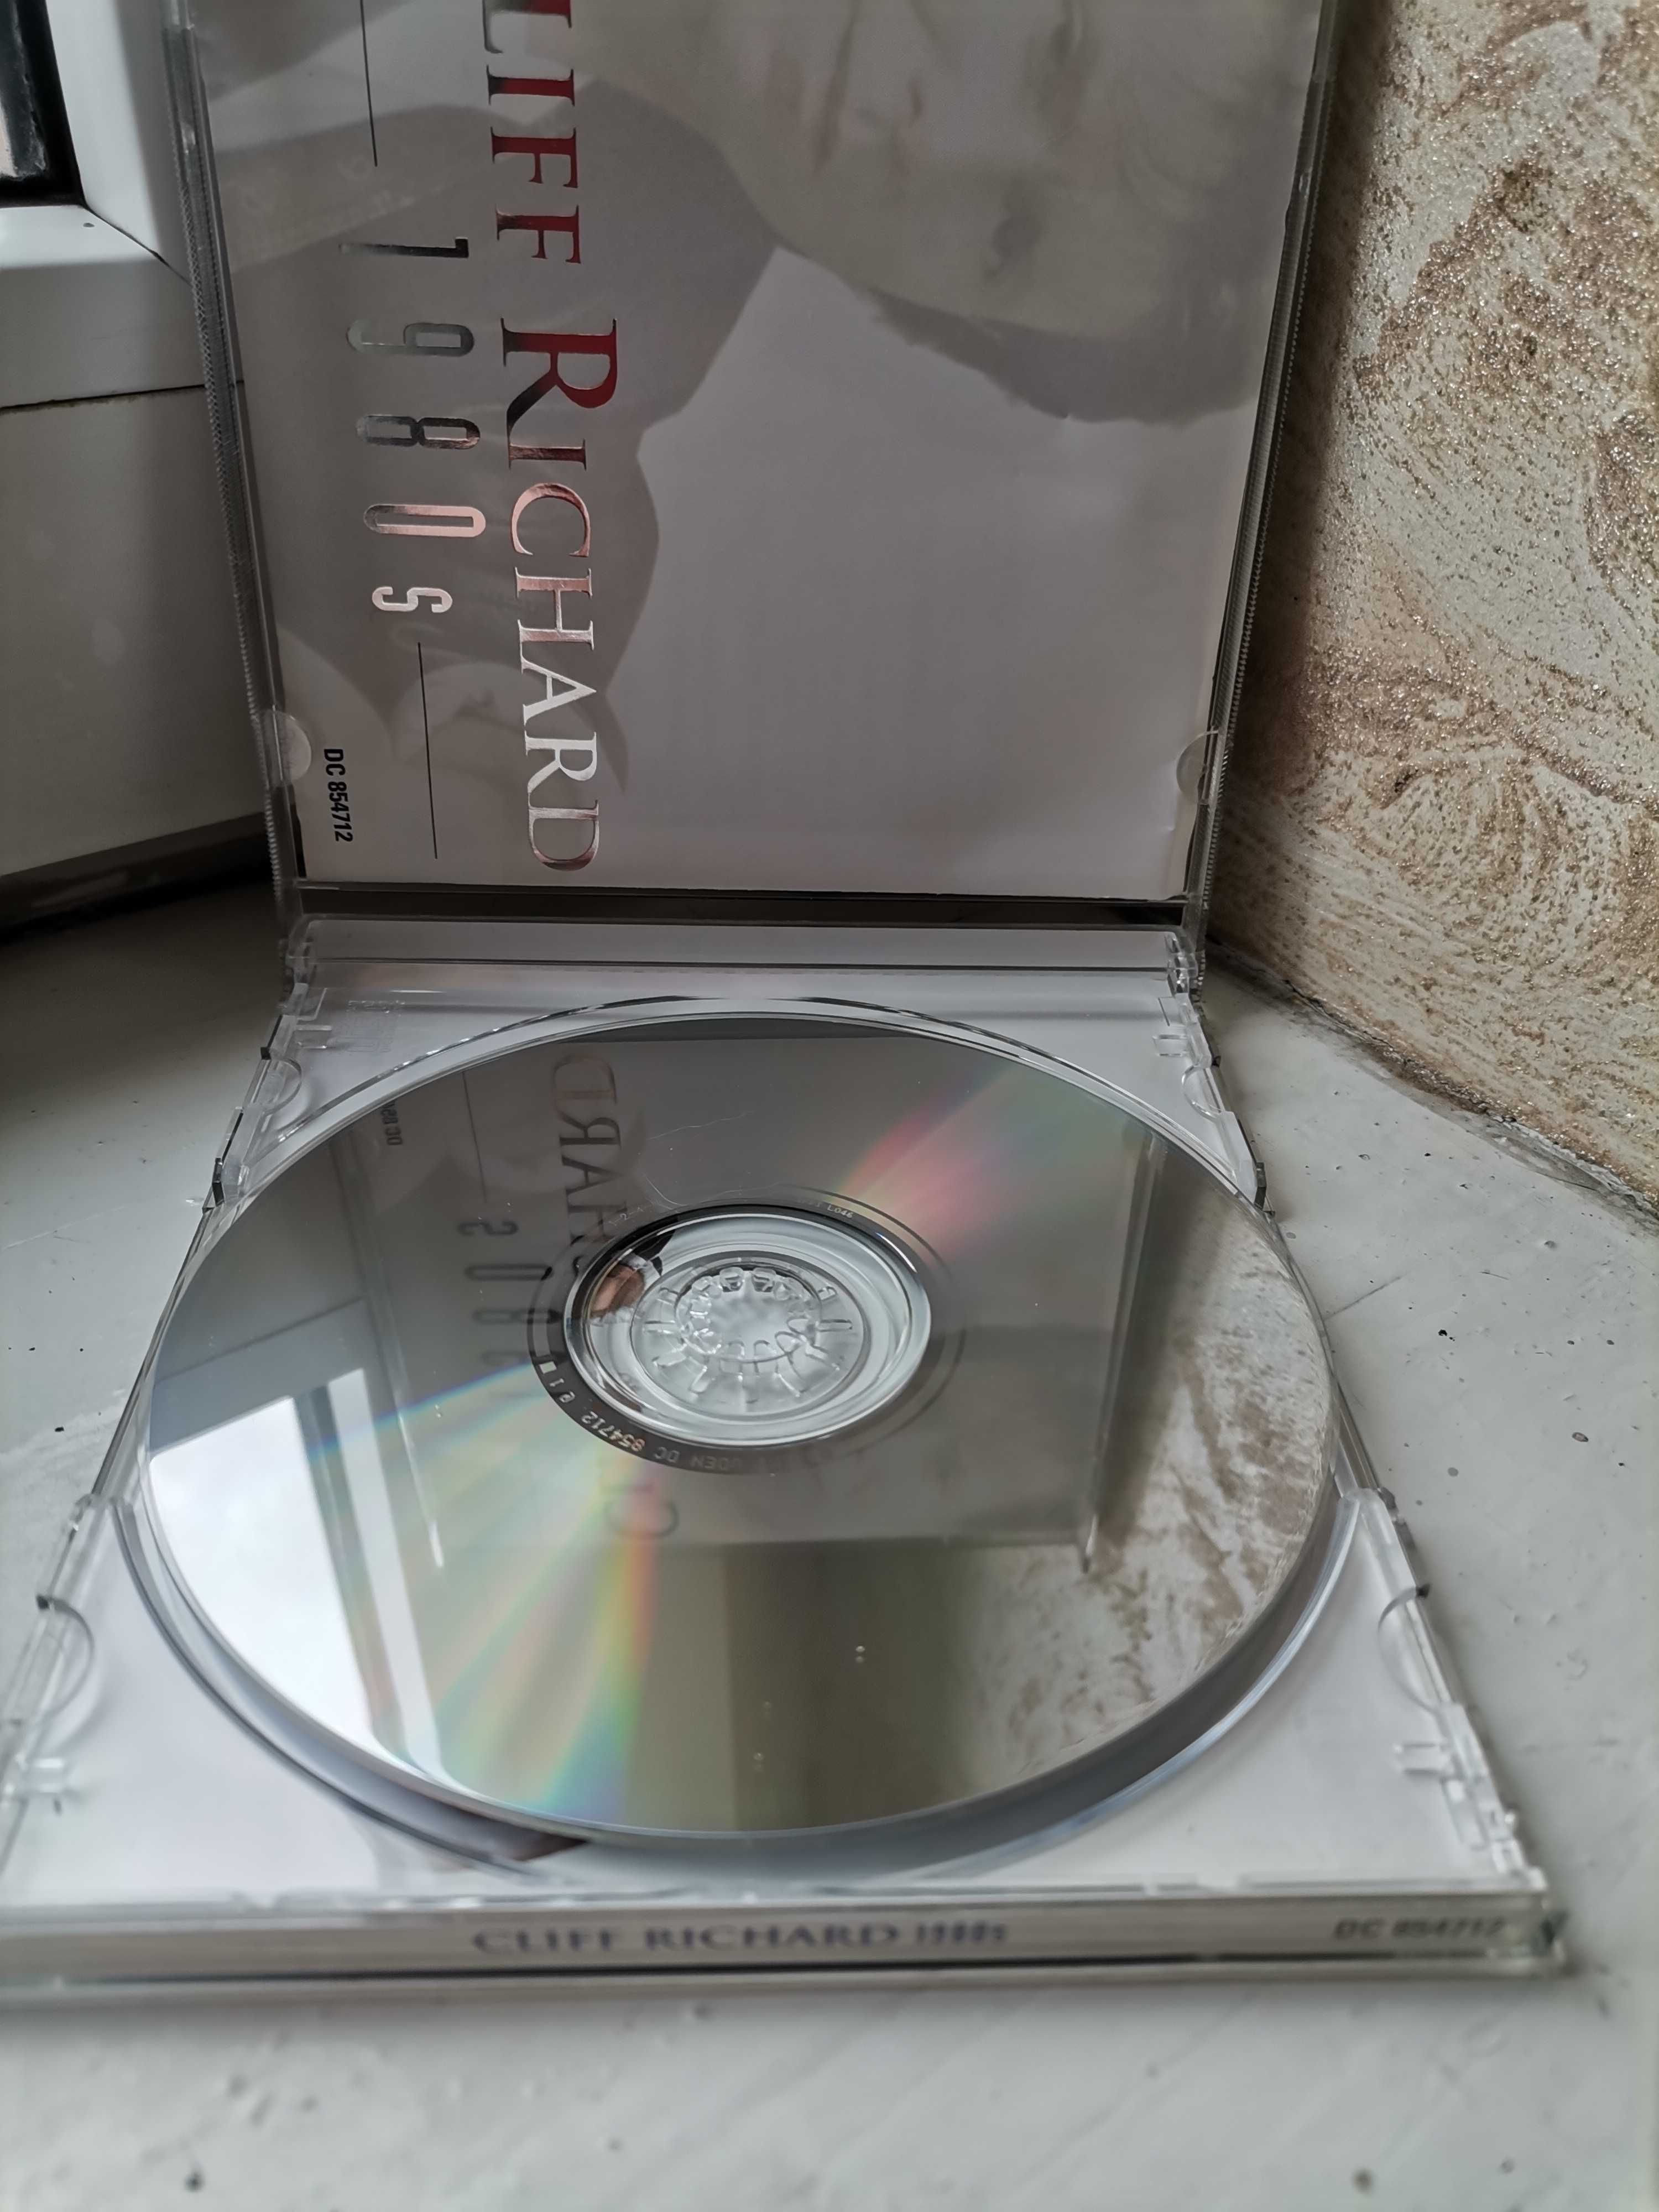 Cliff Richard 1980 s - płyta CD